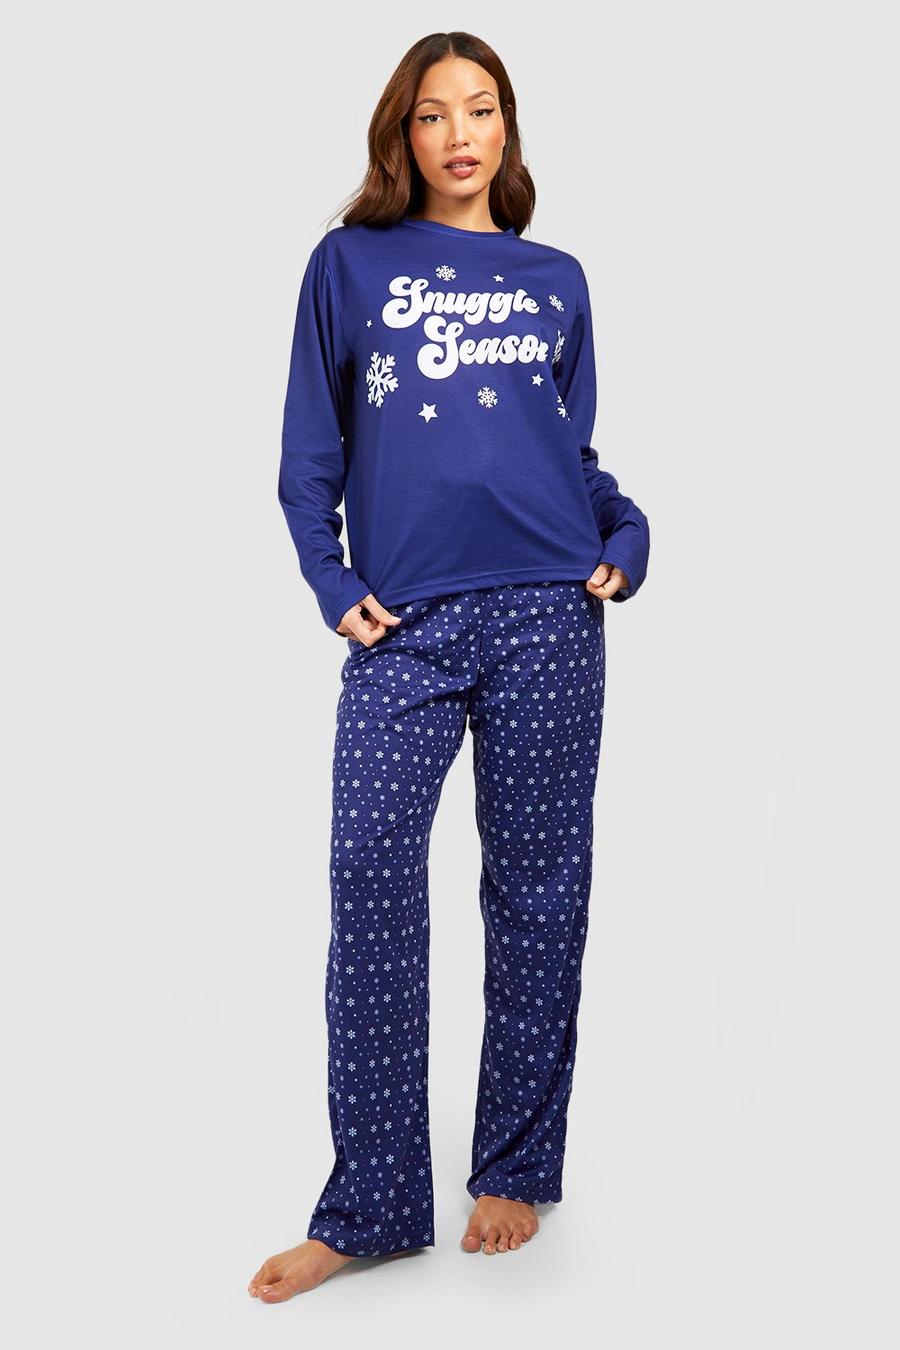 Pijama Tall Snuggle Season, Blue